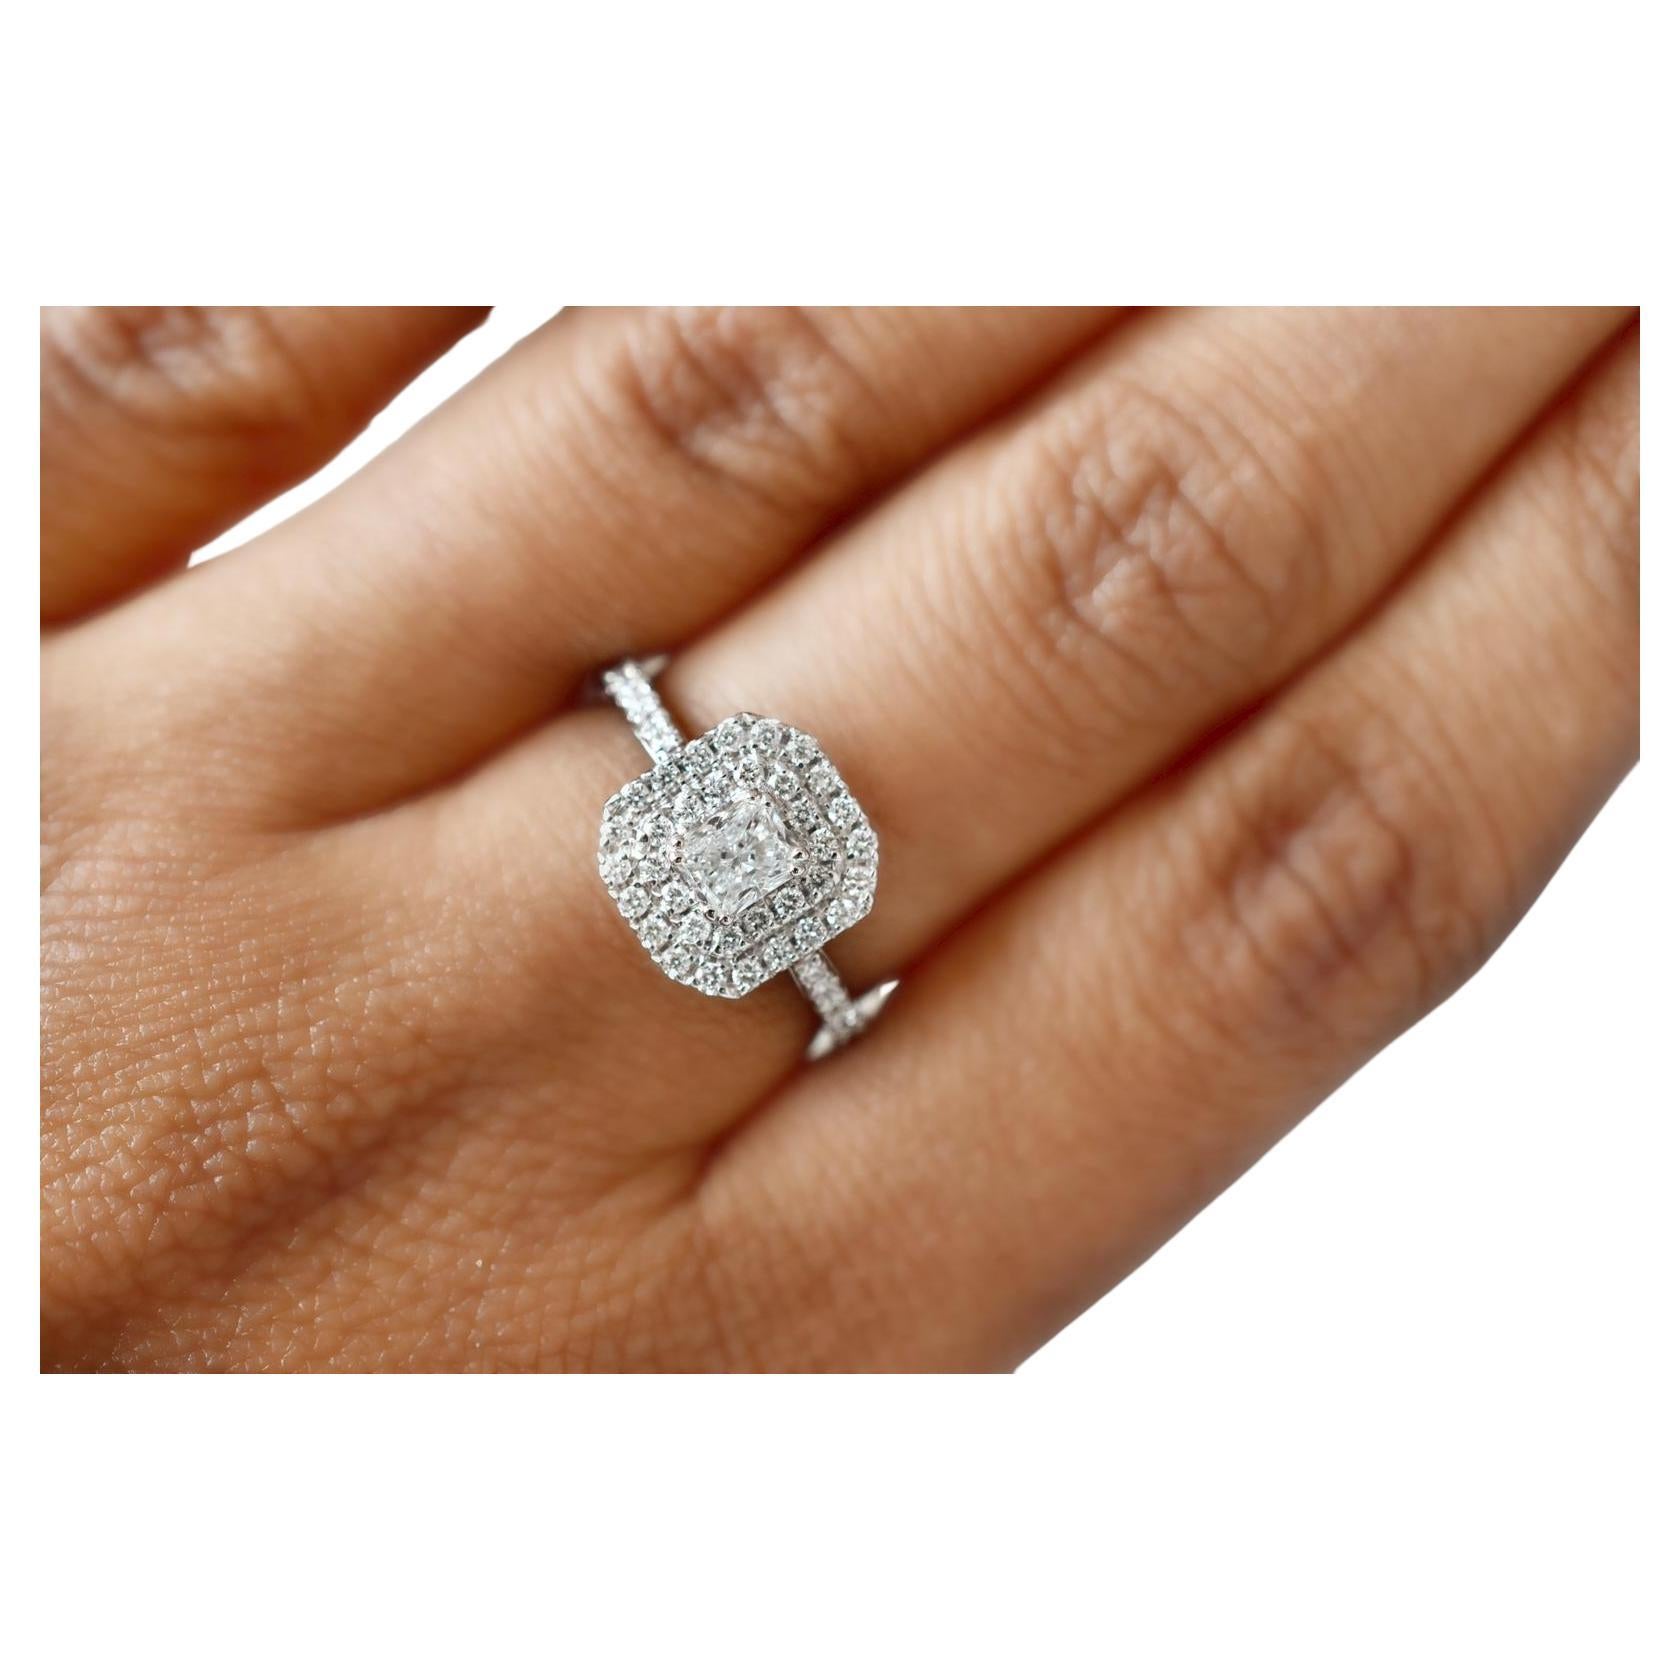 0.42 Carat White Diamond Ring VVS2 Clarity GIA Certified